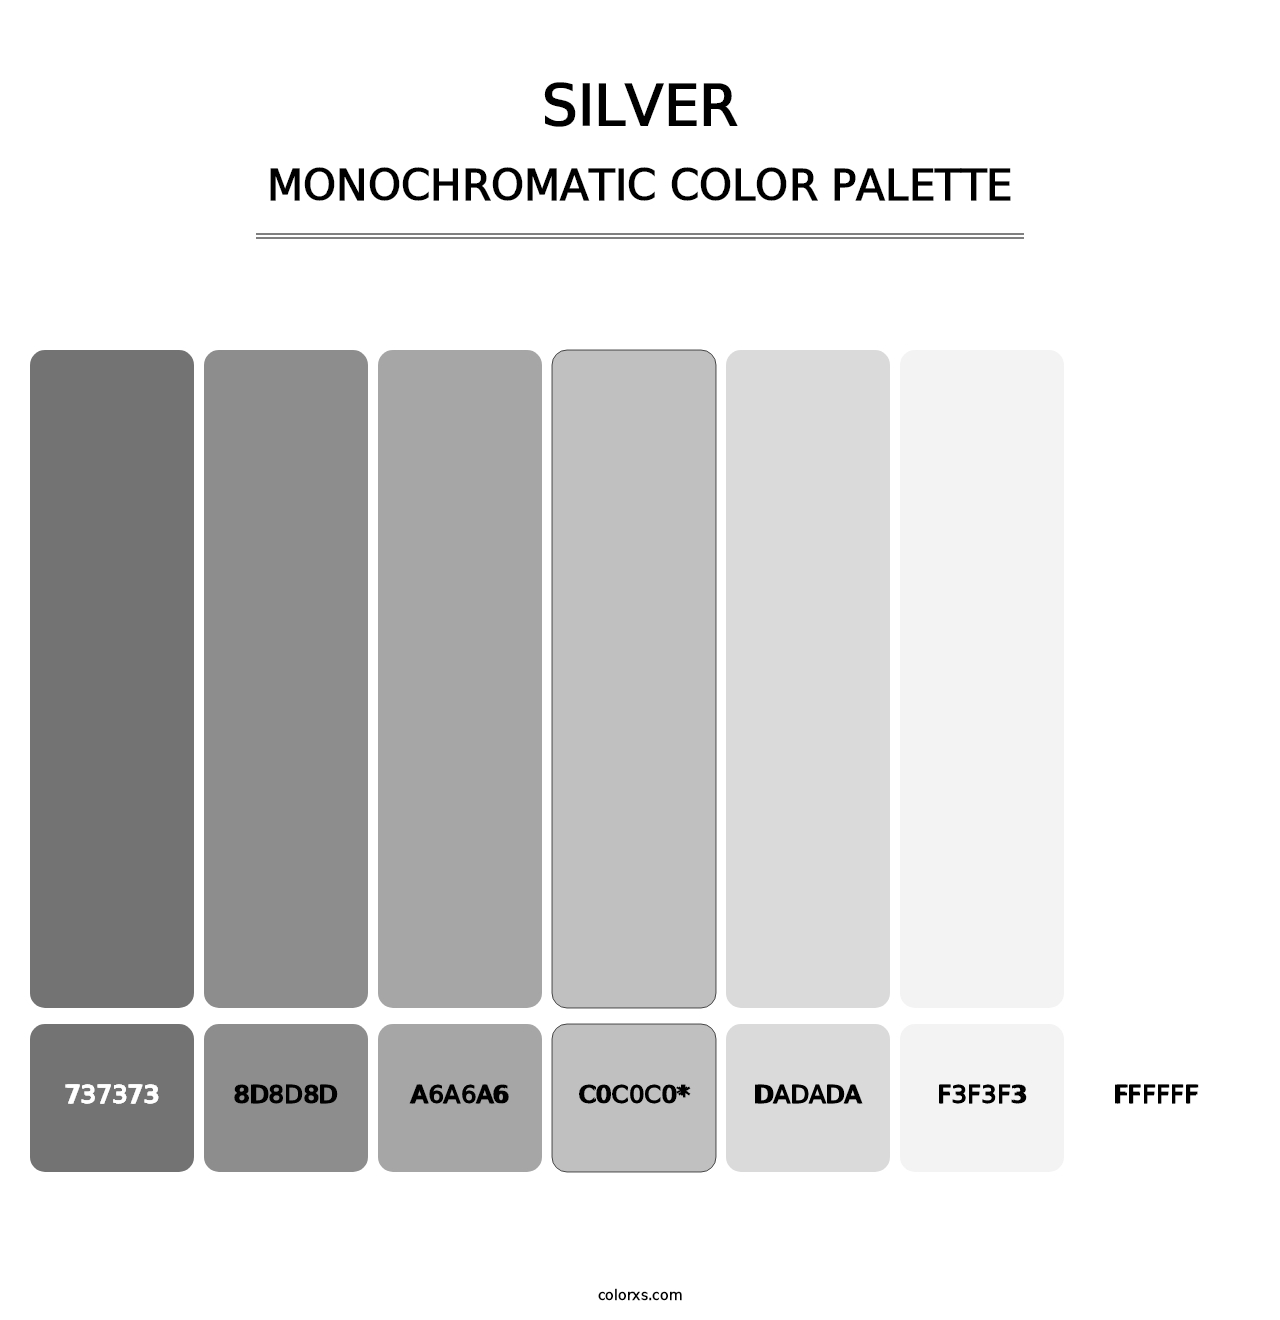 Silver - Monochromatic Color Palette